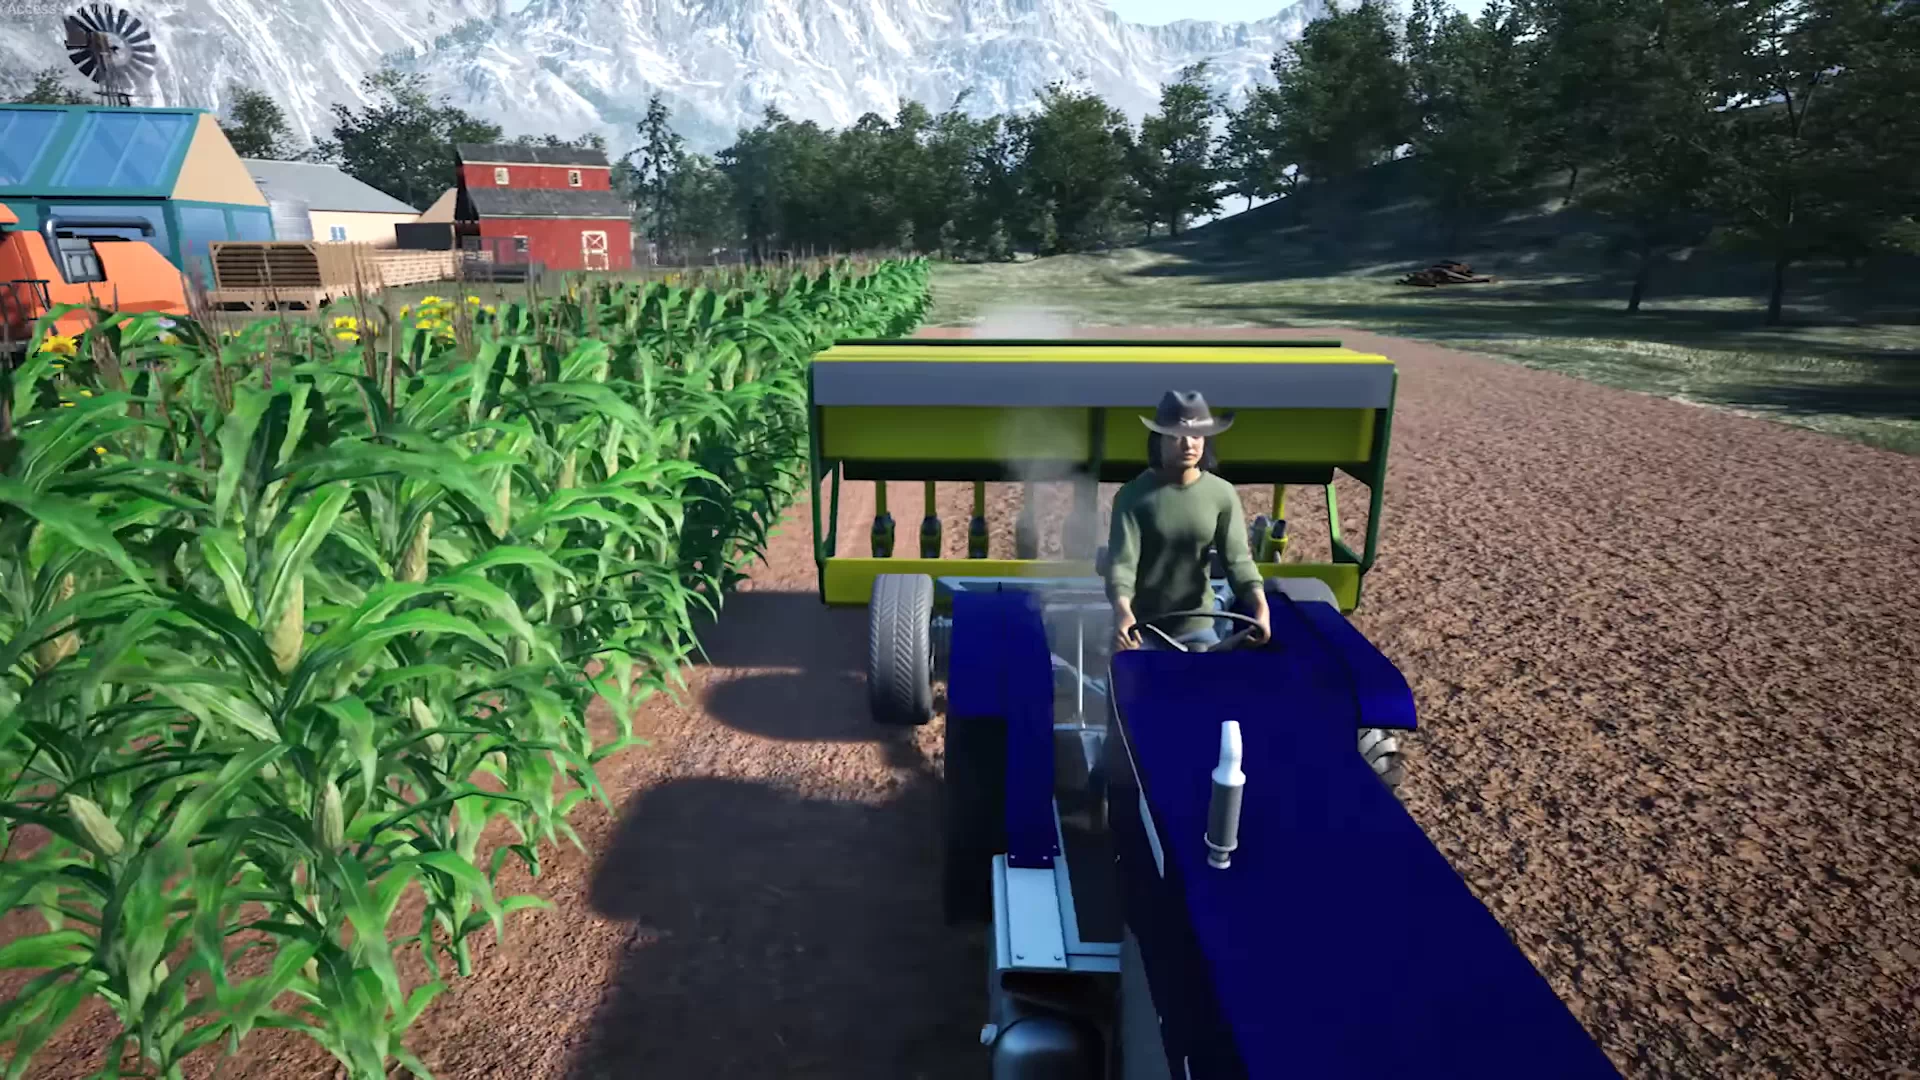 Ranch Simulator - Build, Farm, Hunt 